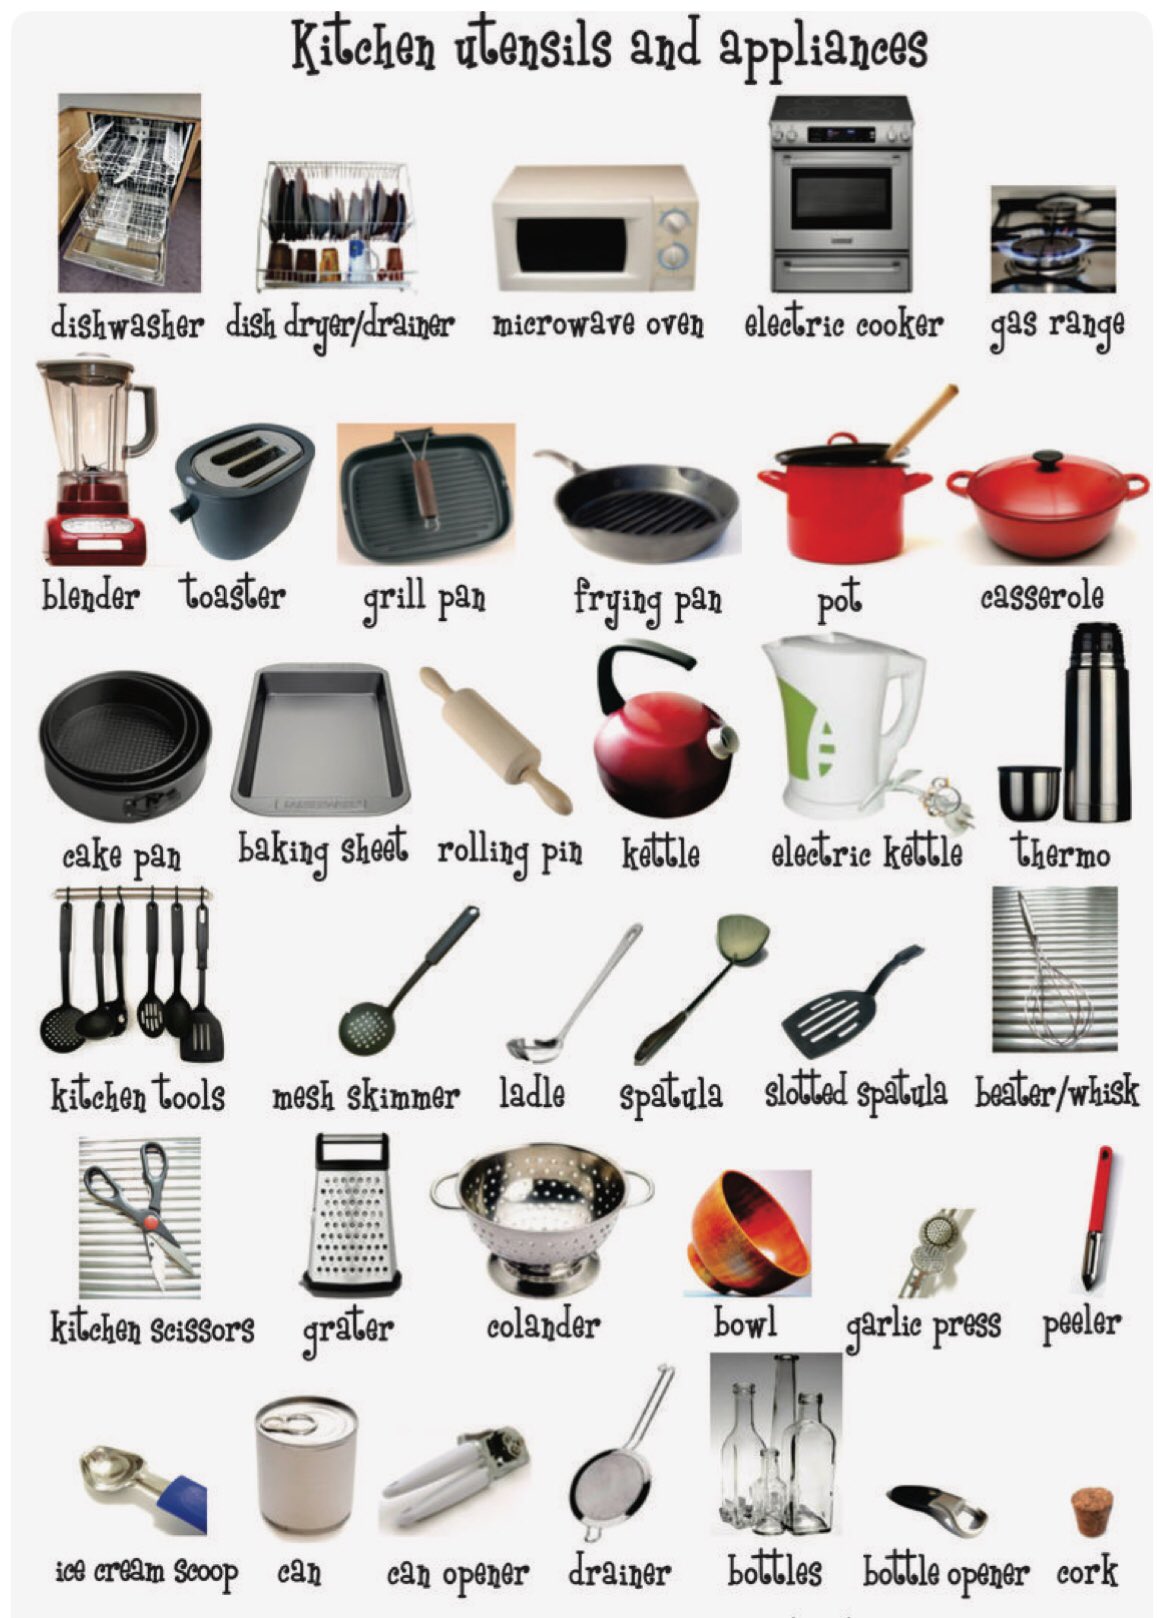 English Our Way on X: Qué utensilios de cocina usas? Sabes